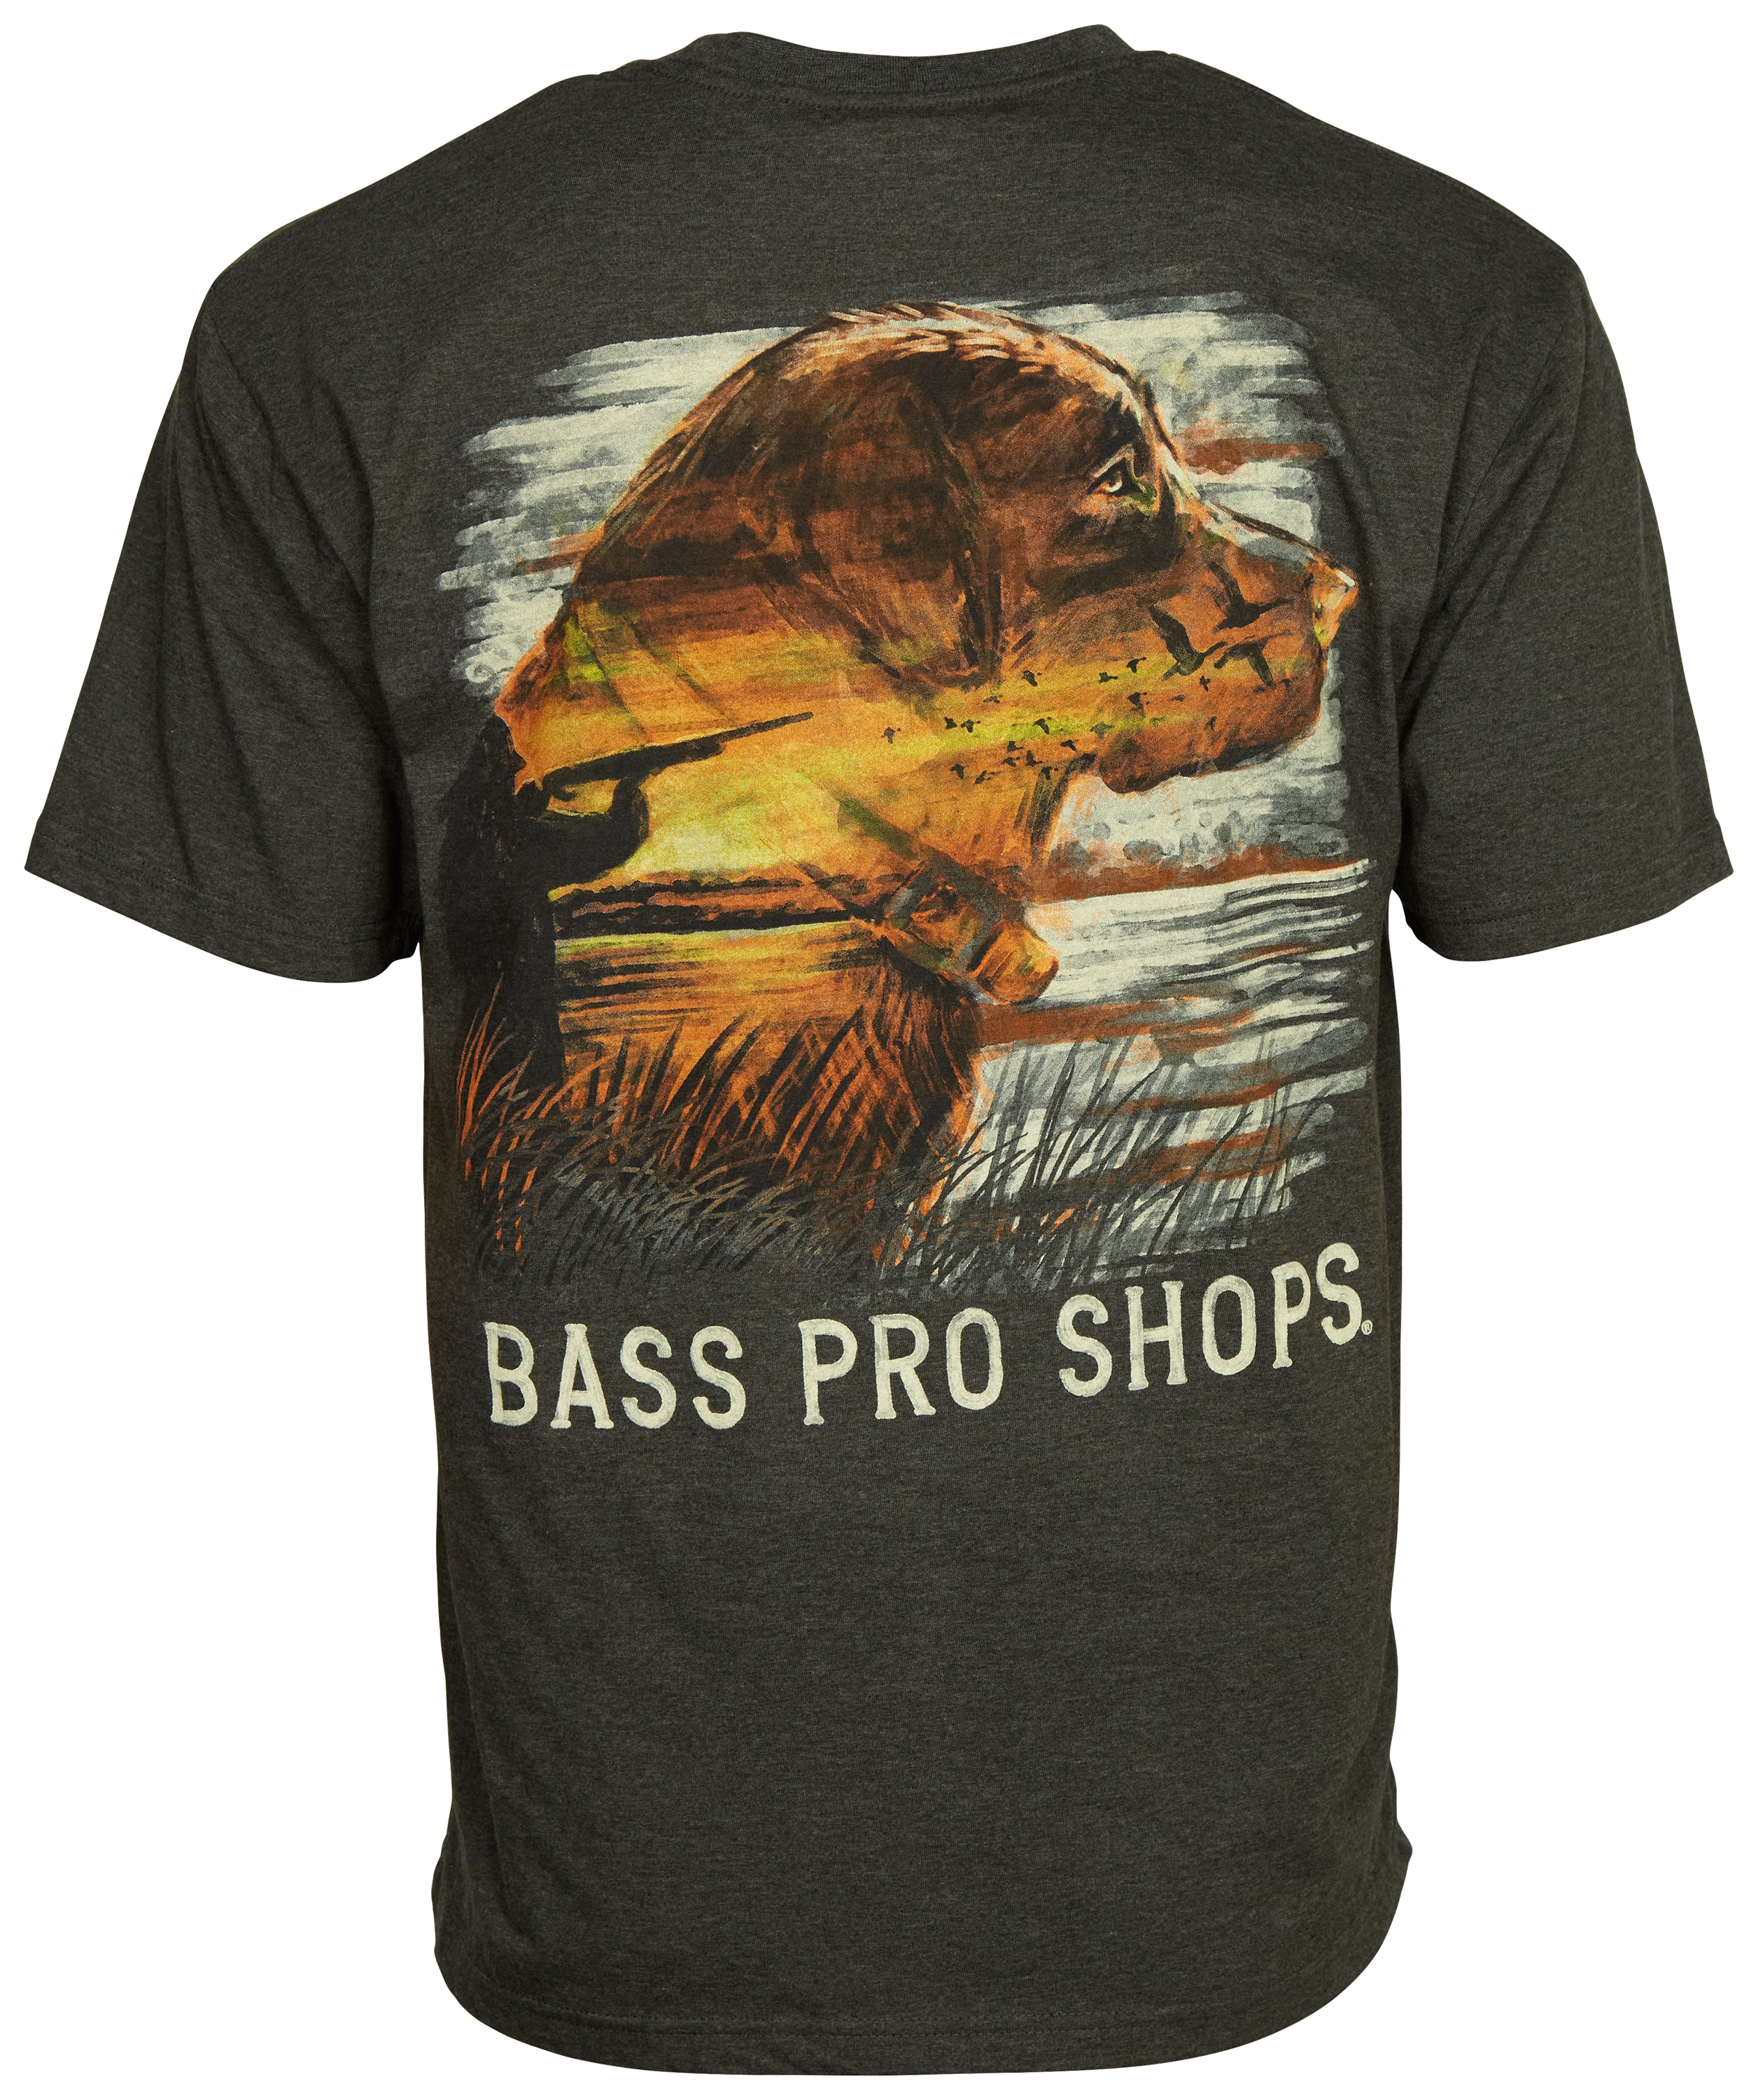 Bass Pro Shops Lab Wildlife Graphic Short-Sleeve T-Shirt for Men